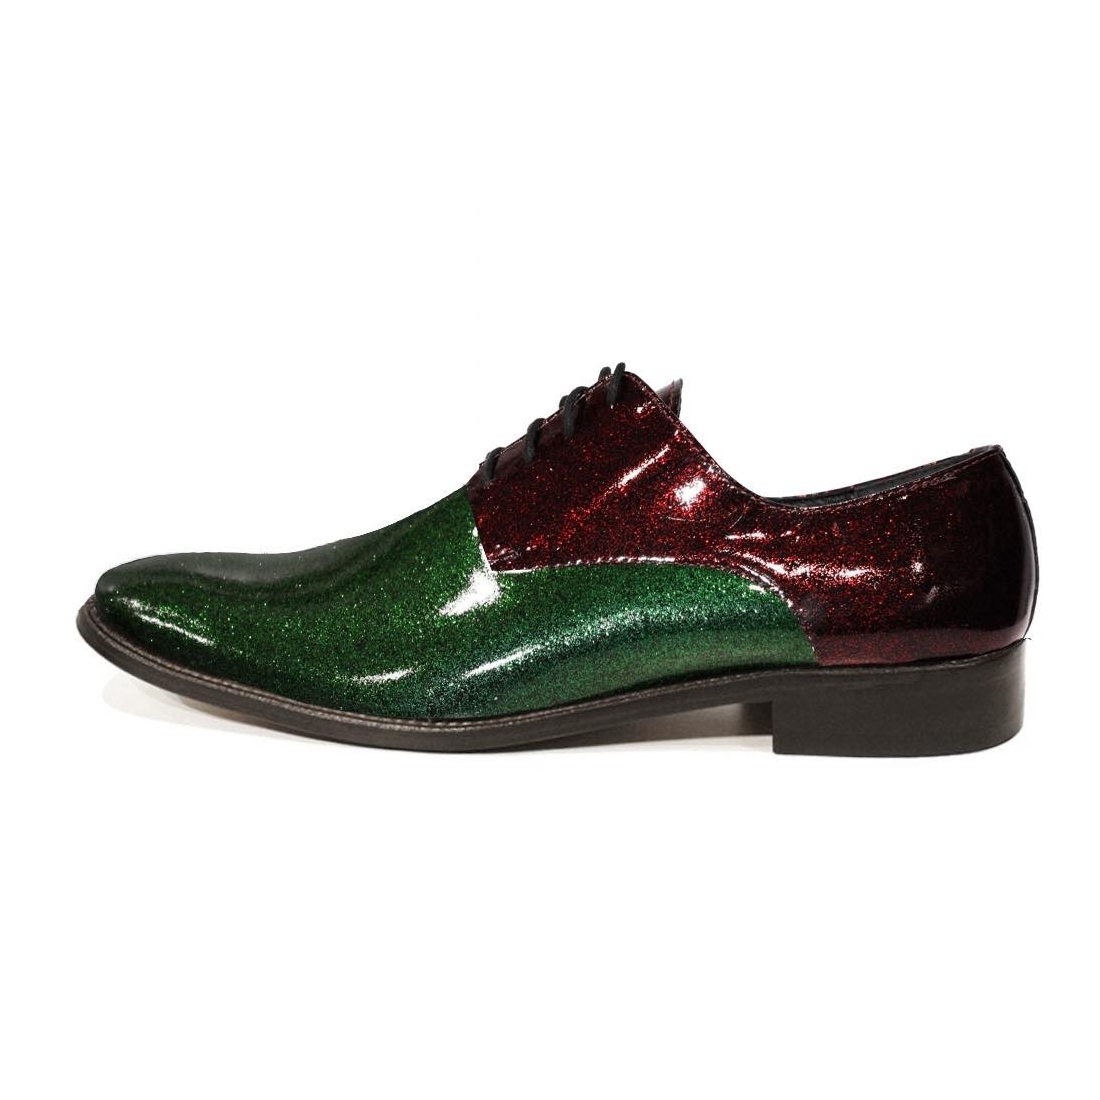 Modello Luccichio - Schnürer - Handmade Colorful Italian Leather Shoes